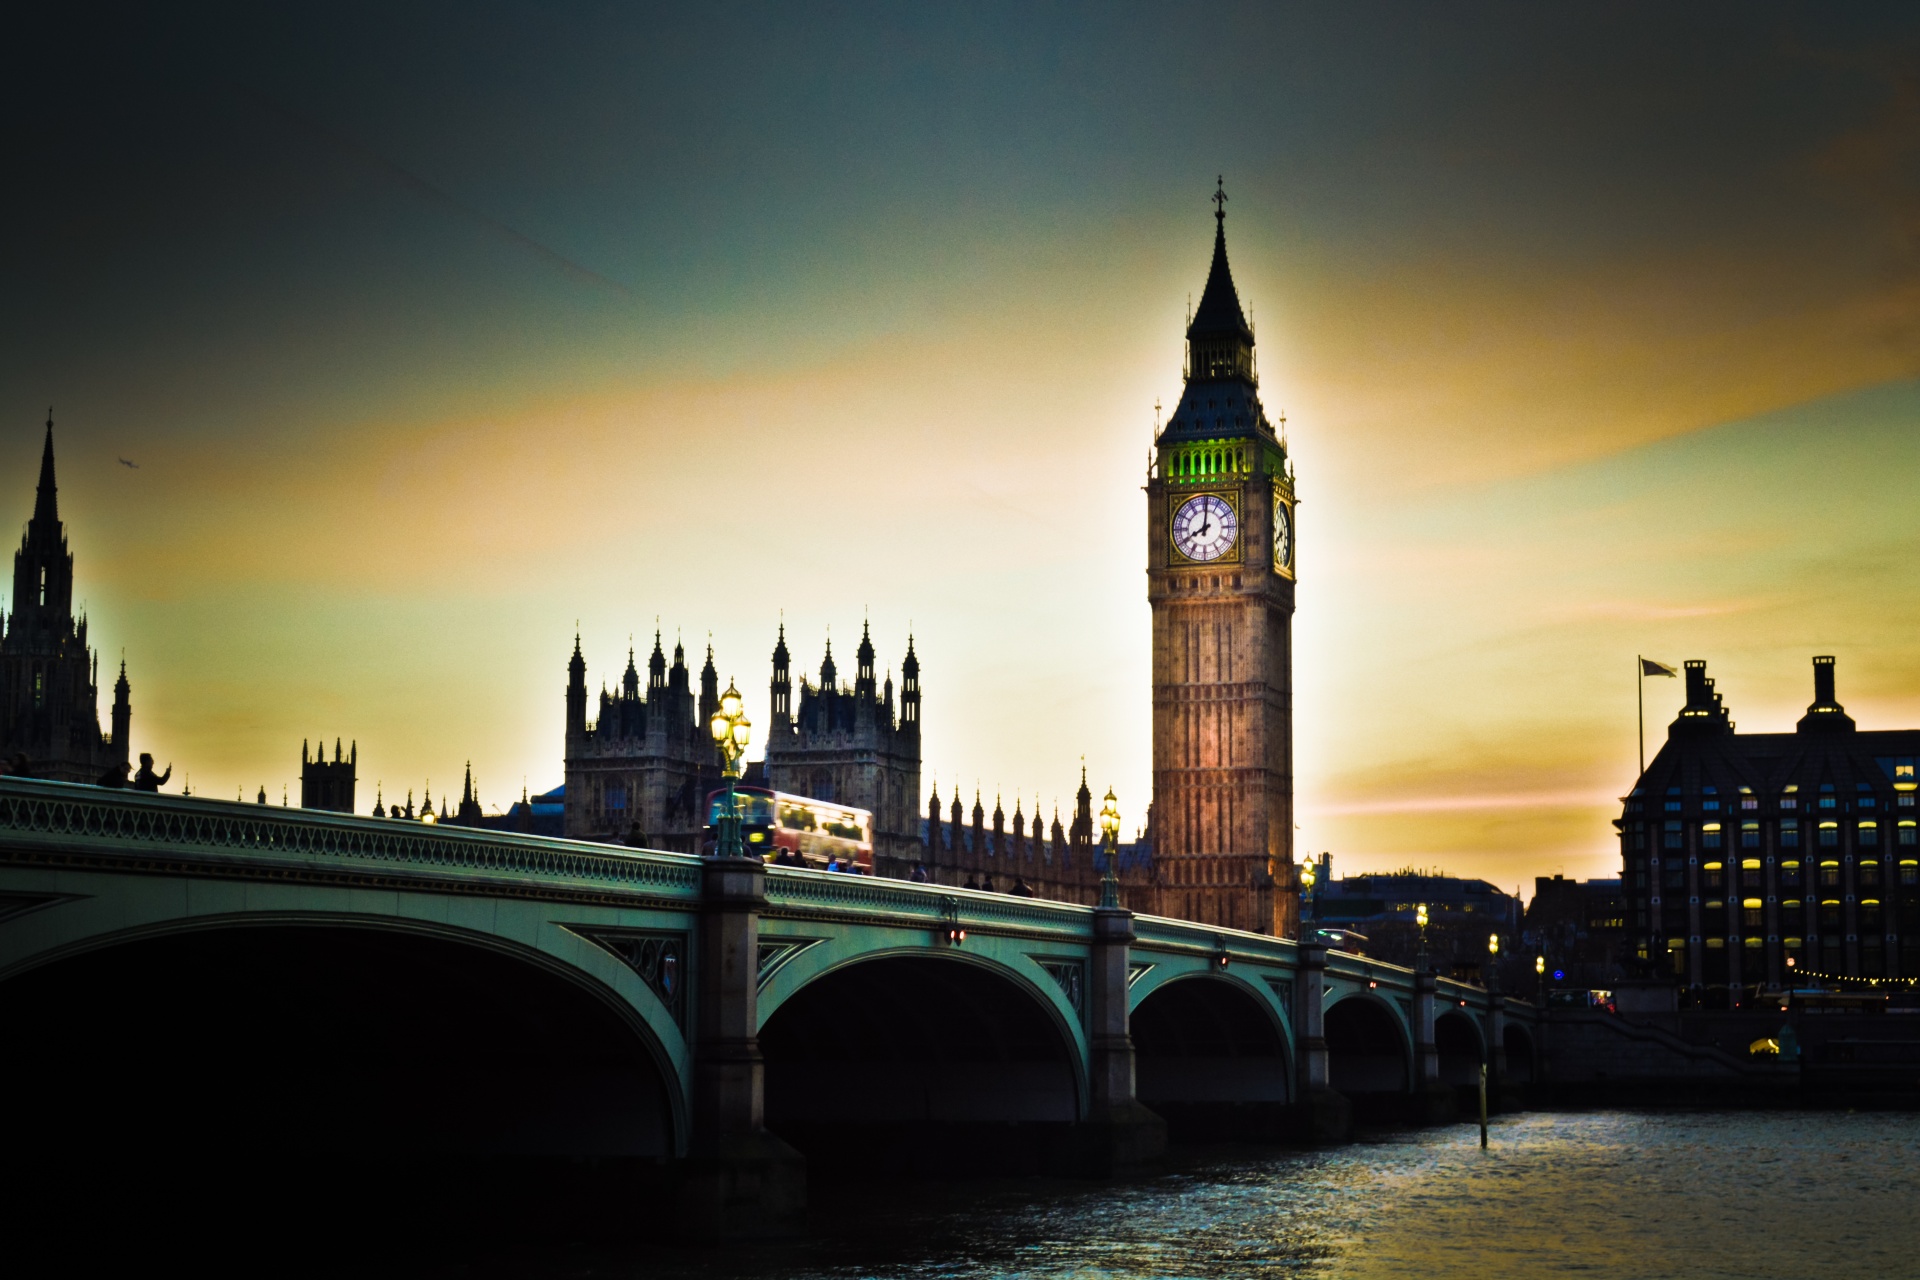 London Parliament & Big Ben in HDR